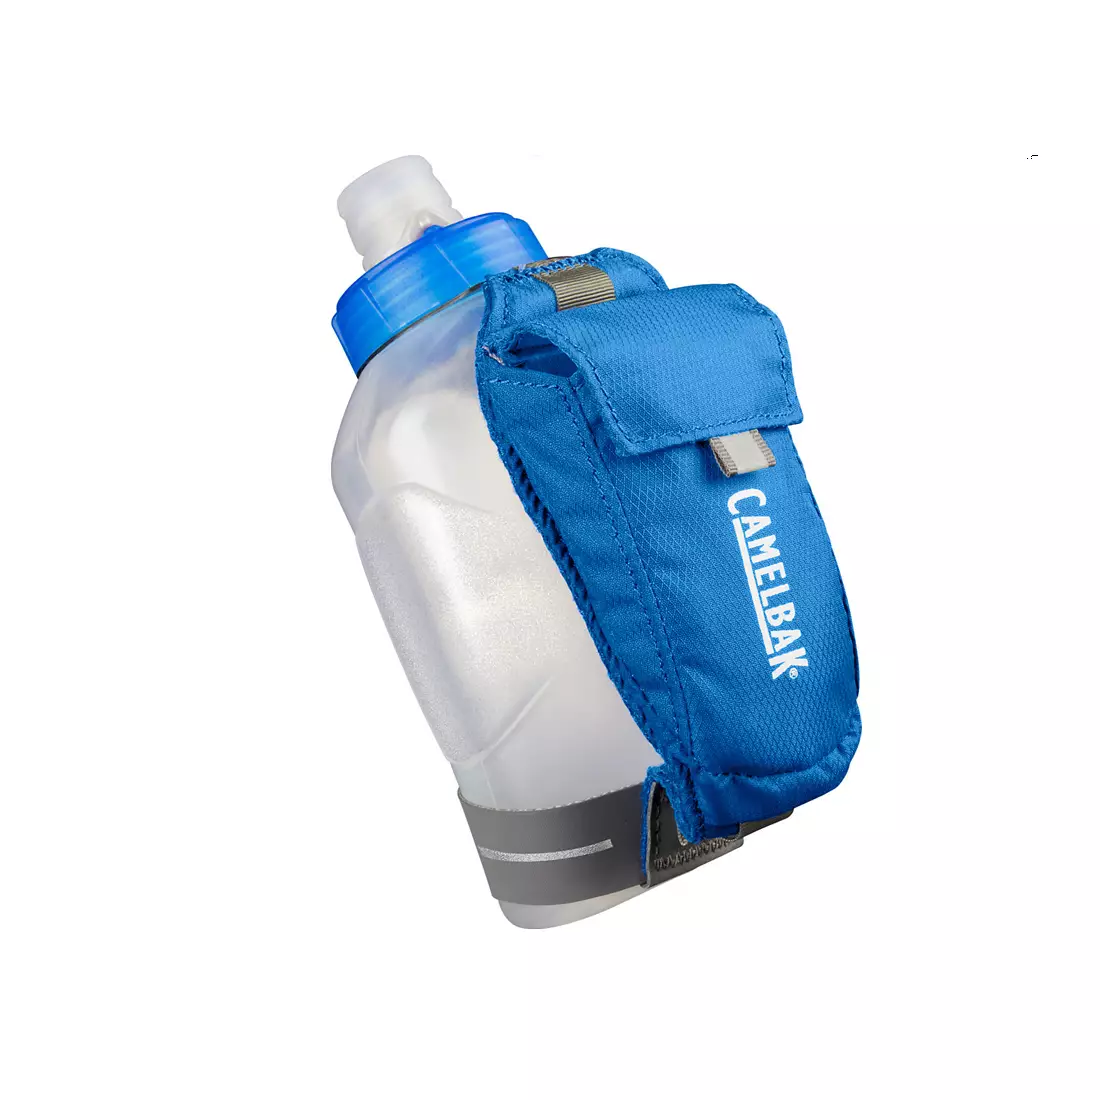 CAMLBAK Arc Quick Grip Running Bottle 10 oz / 293 ml Podium Arc Bottle Skydiver INTL 62074-IN SS16